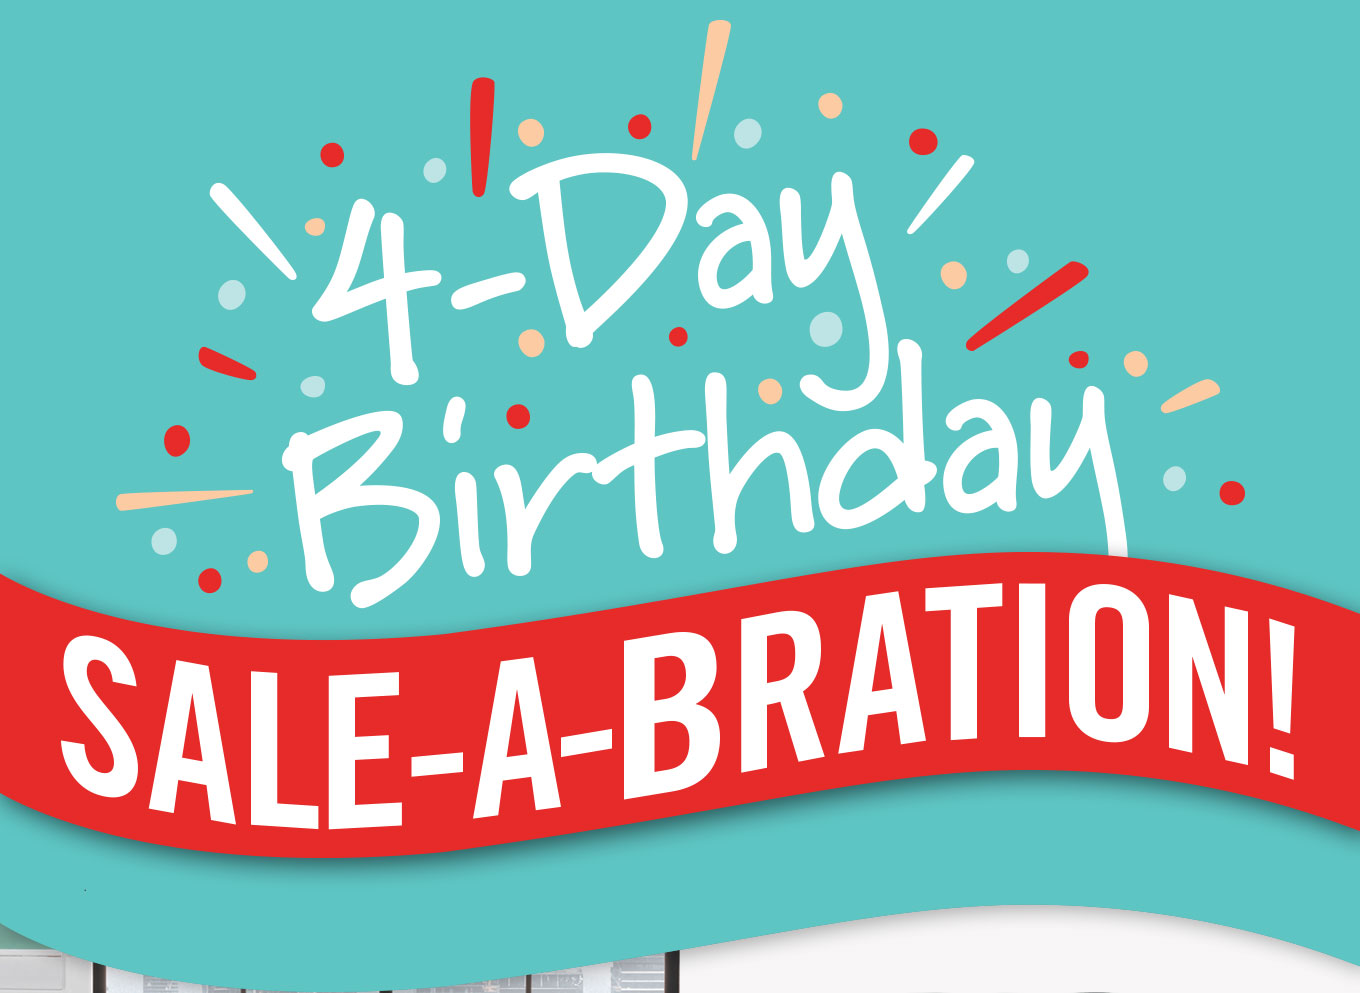 4-Day Birthday / Sale-a-bration!